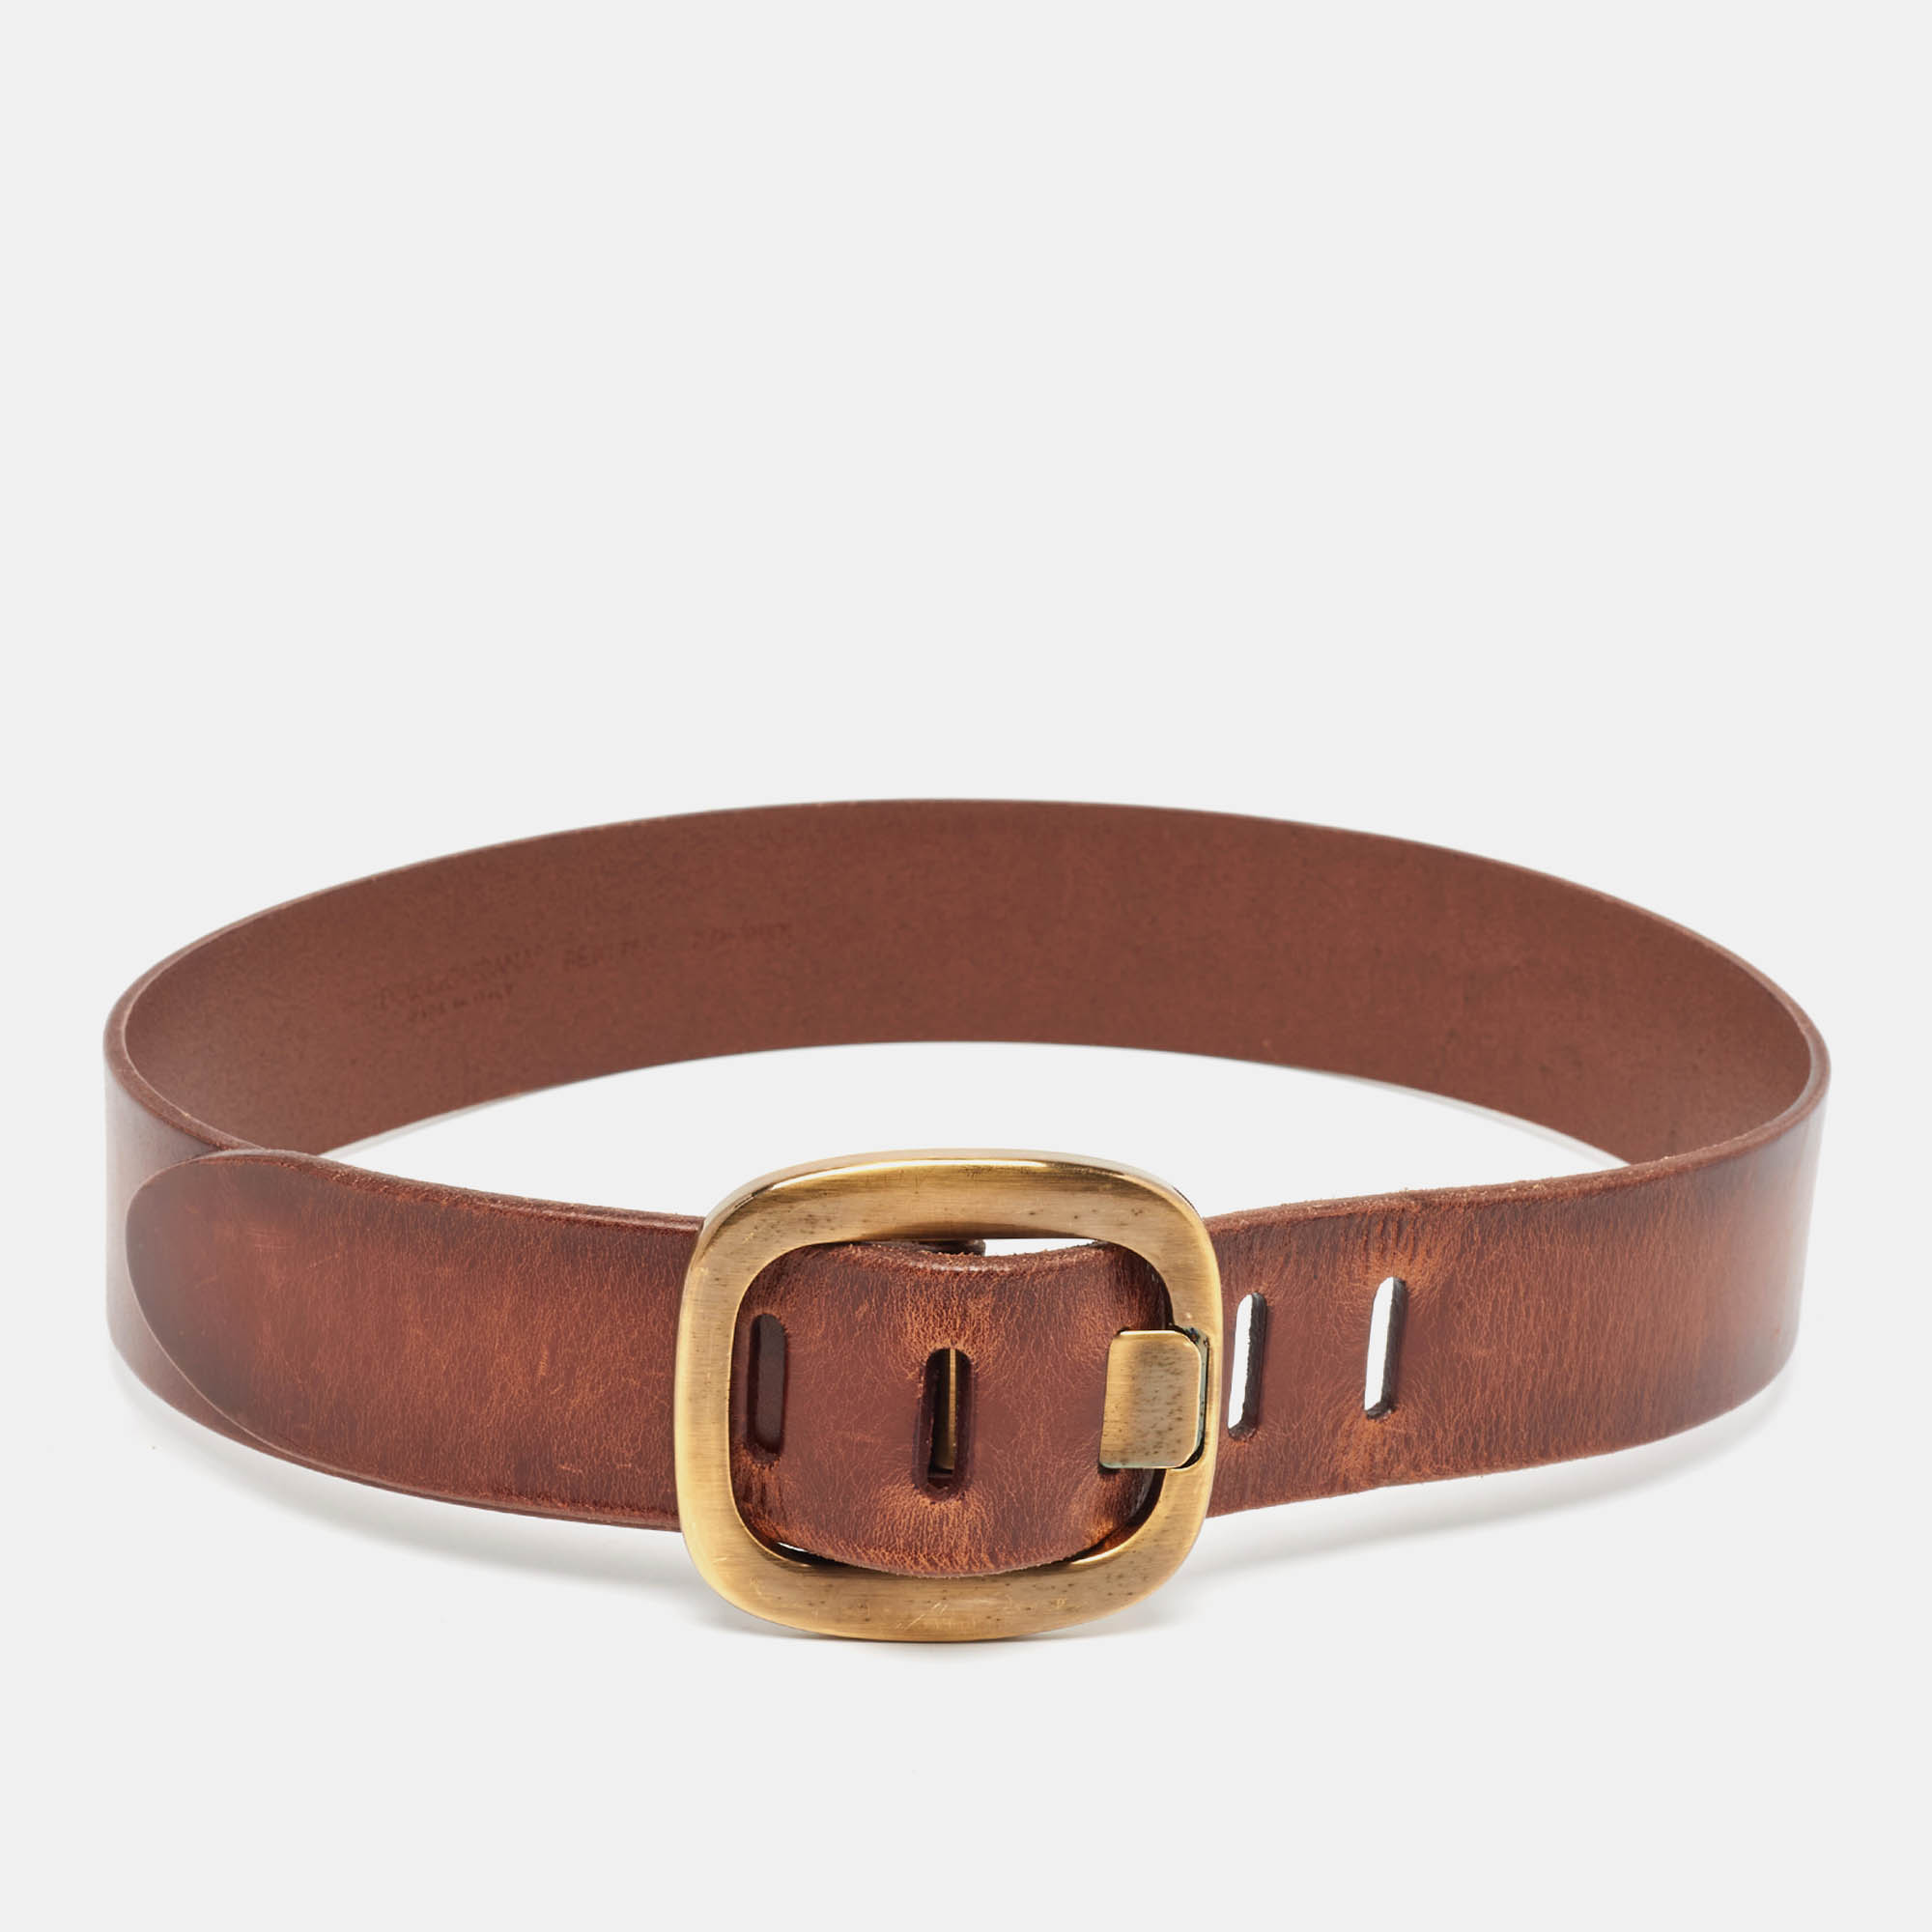 Dolce & gabbana brown leather buckle belt 75cm